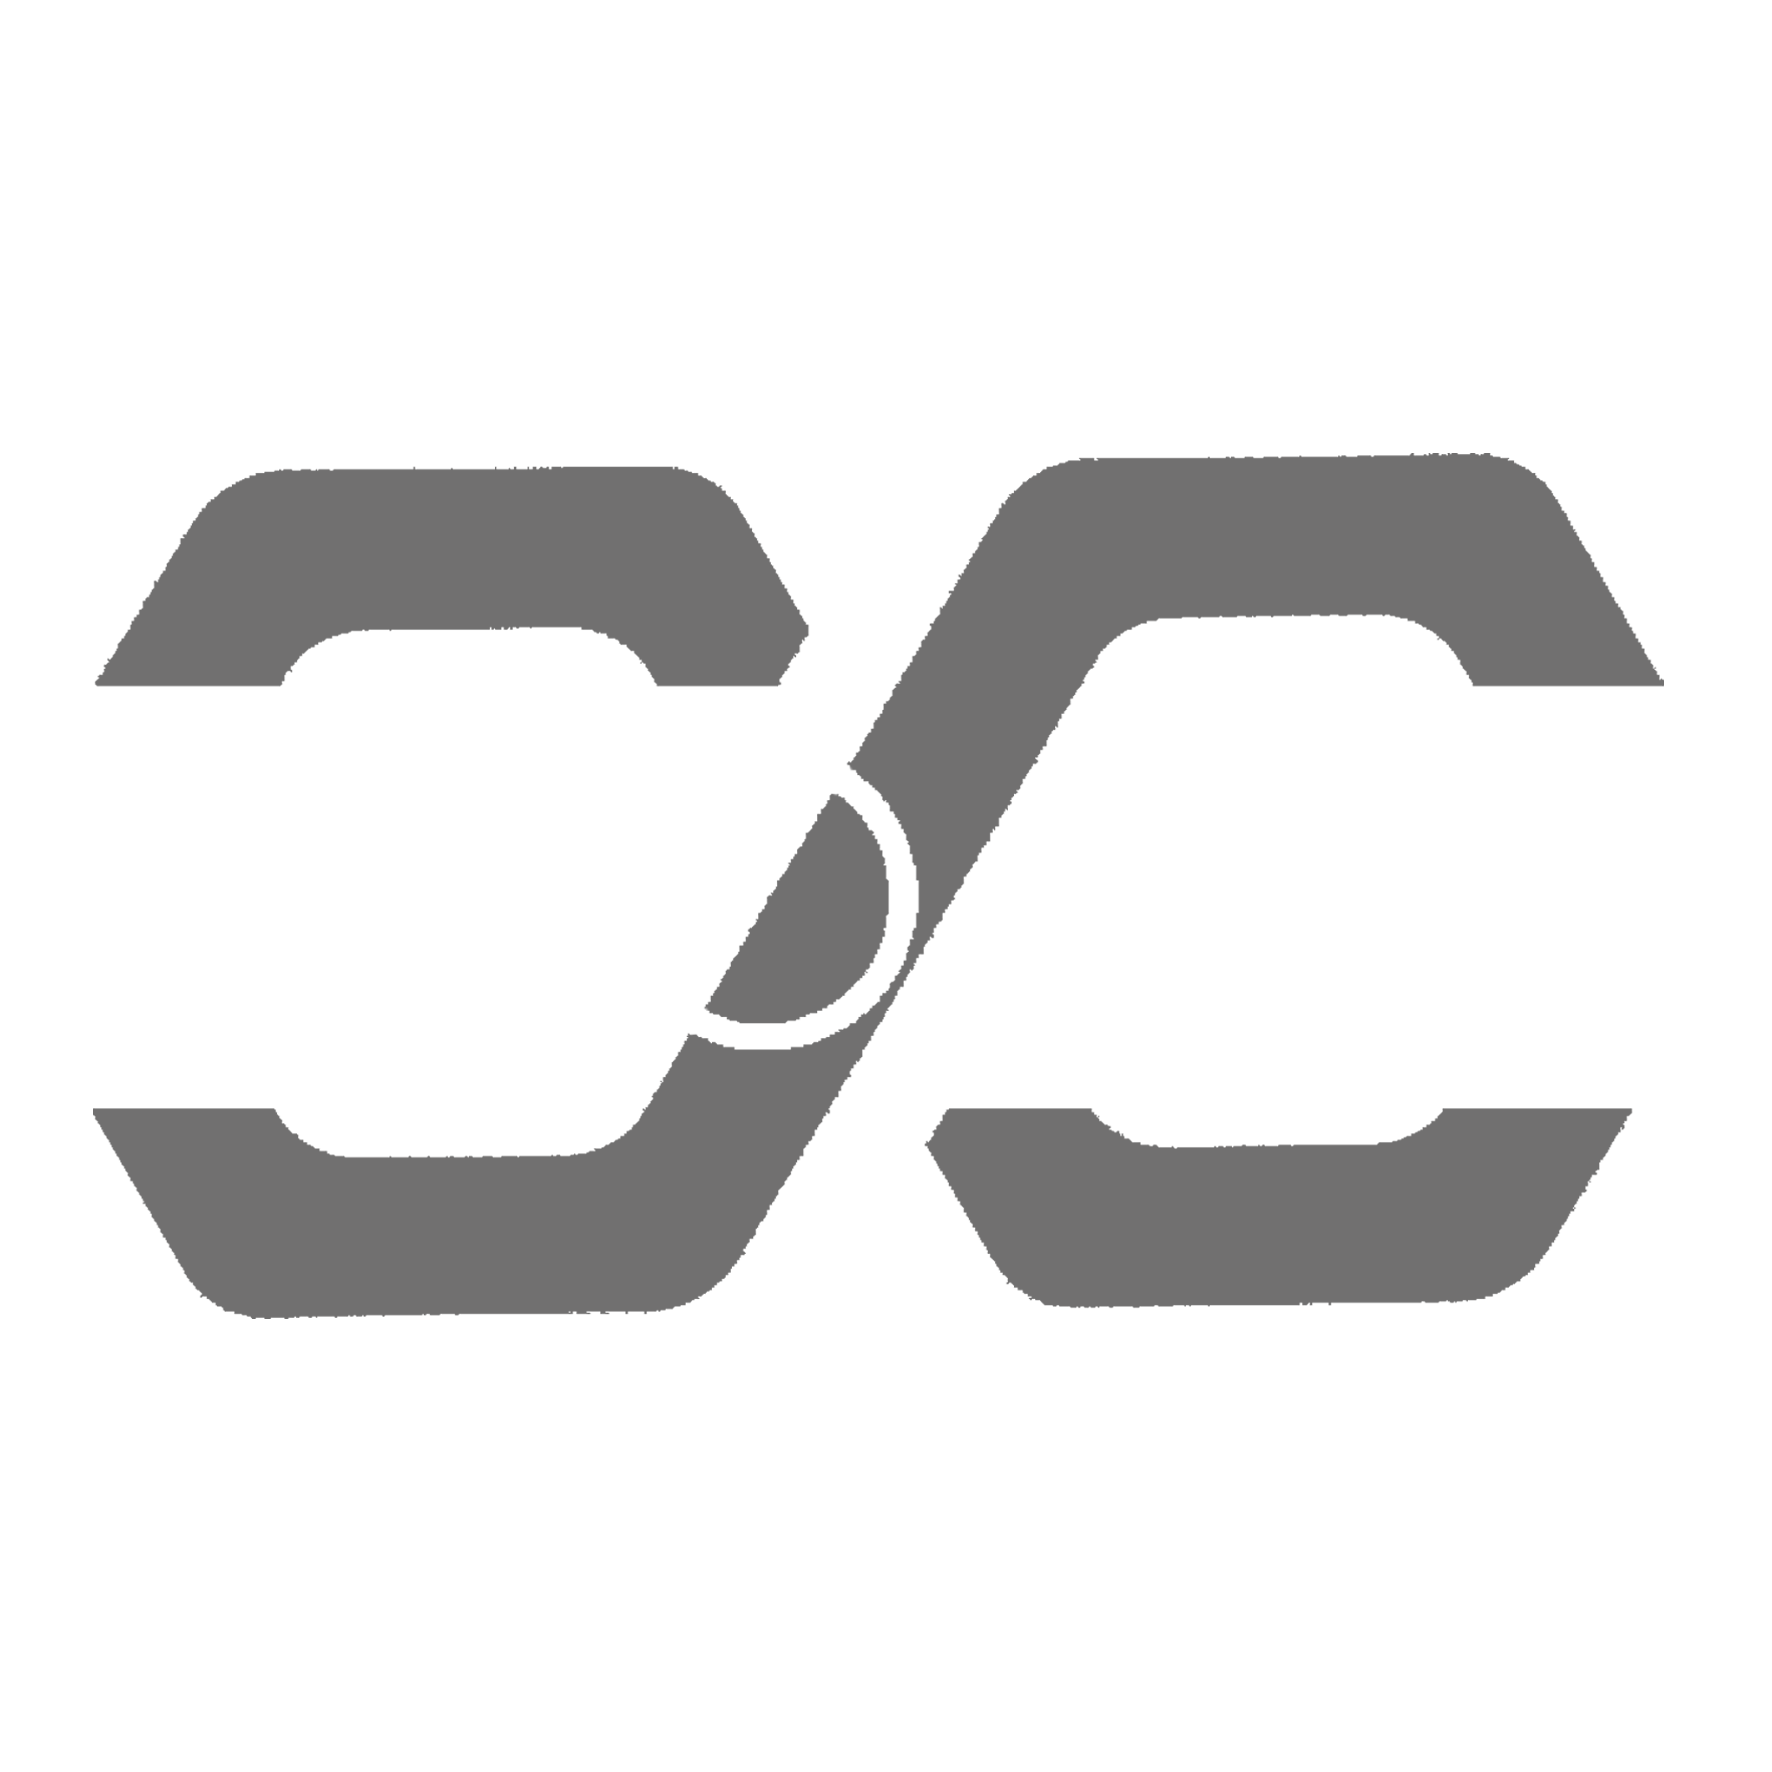 evolve_logo